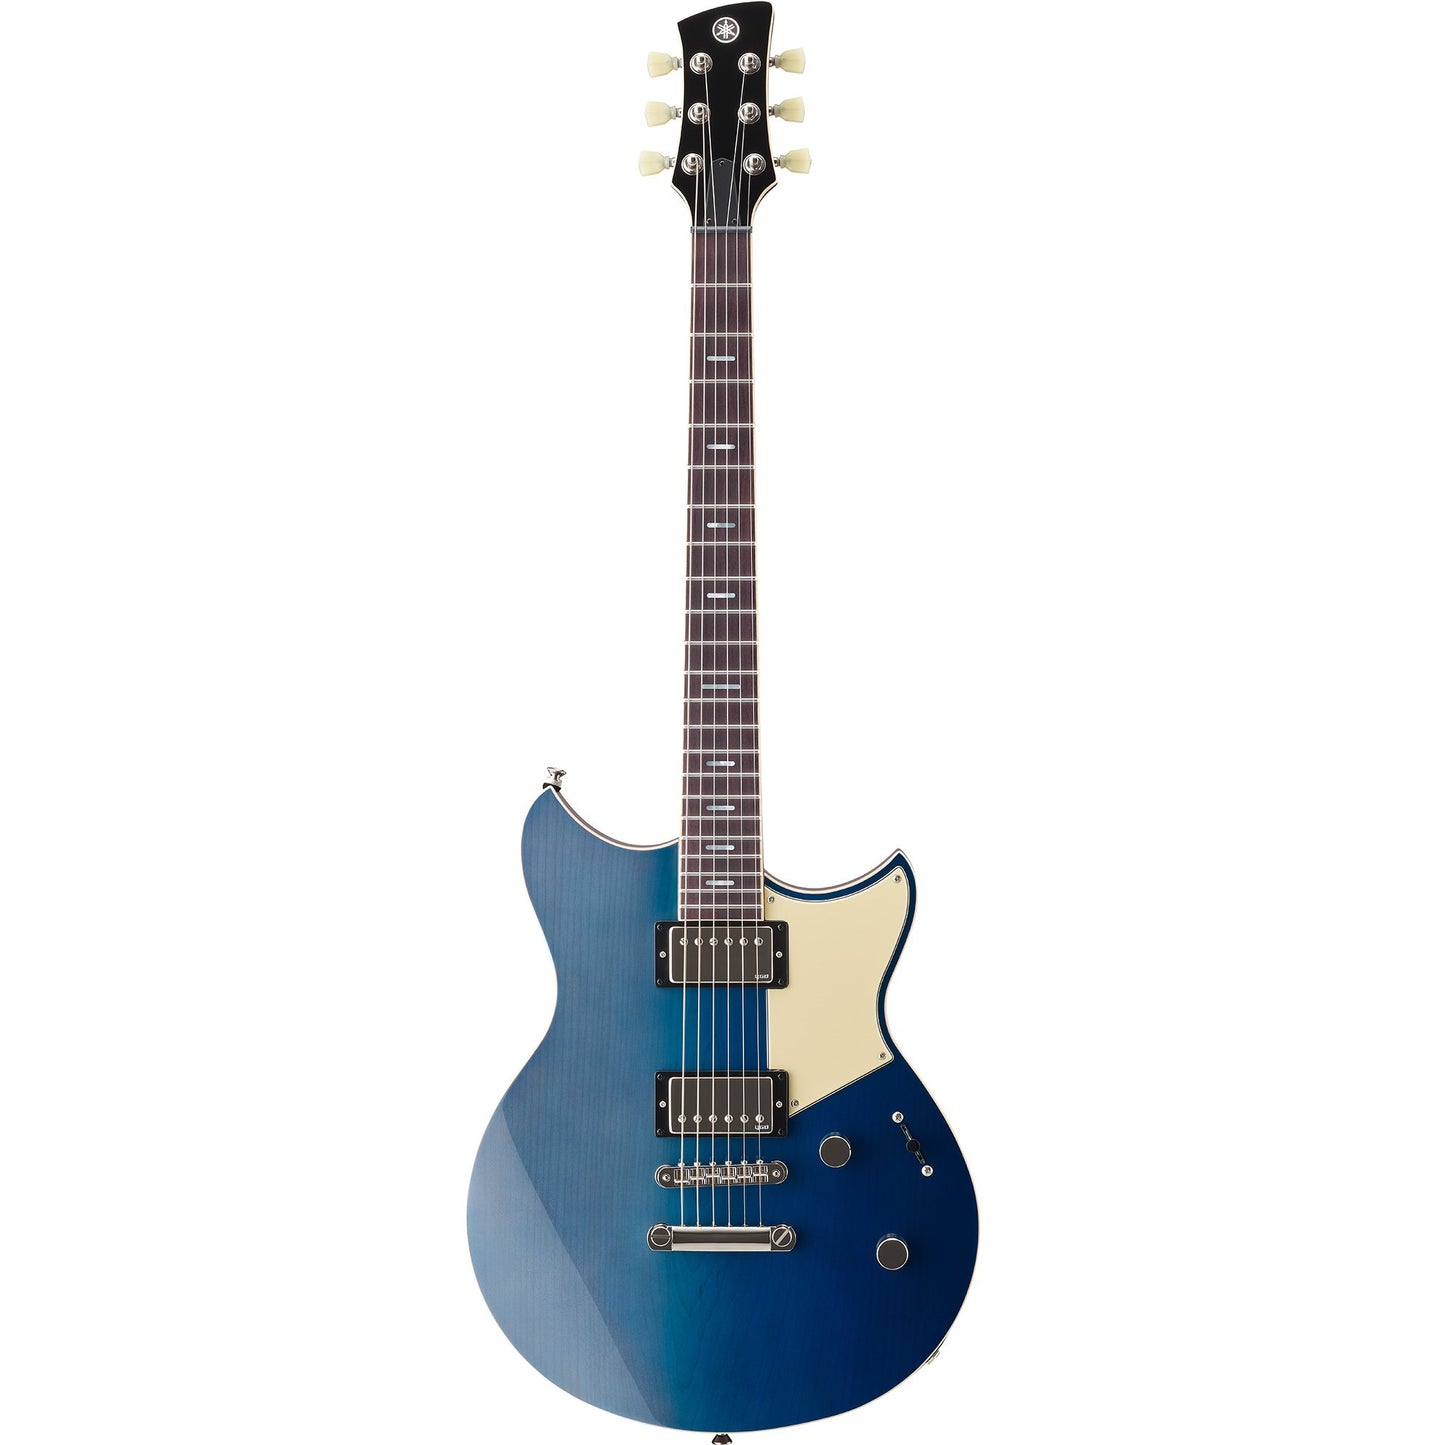 Yamaha Revstar RSP20 Moonlight Blue Electric Guitar